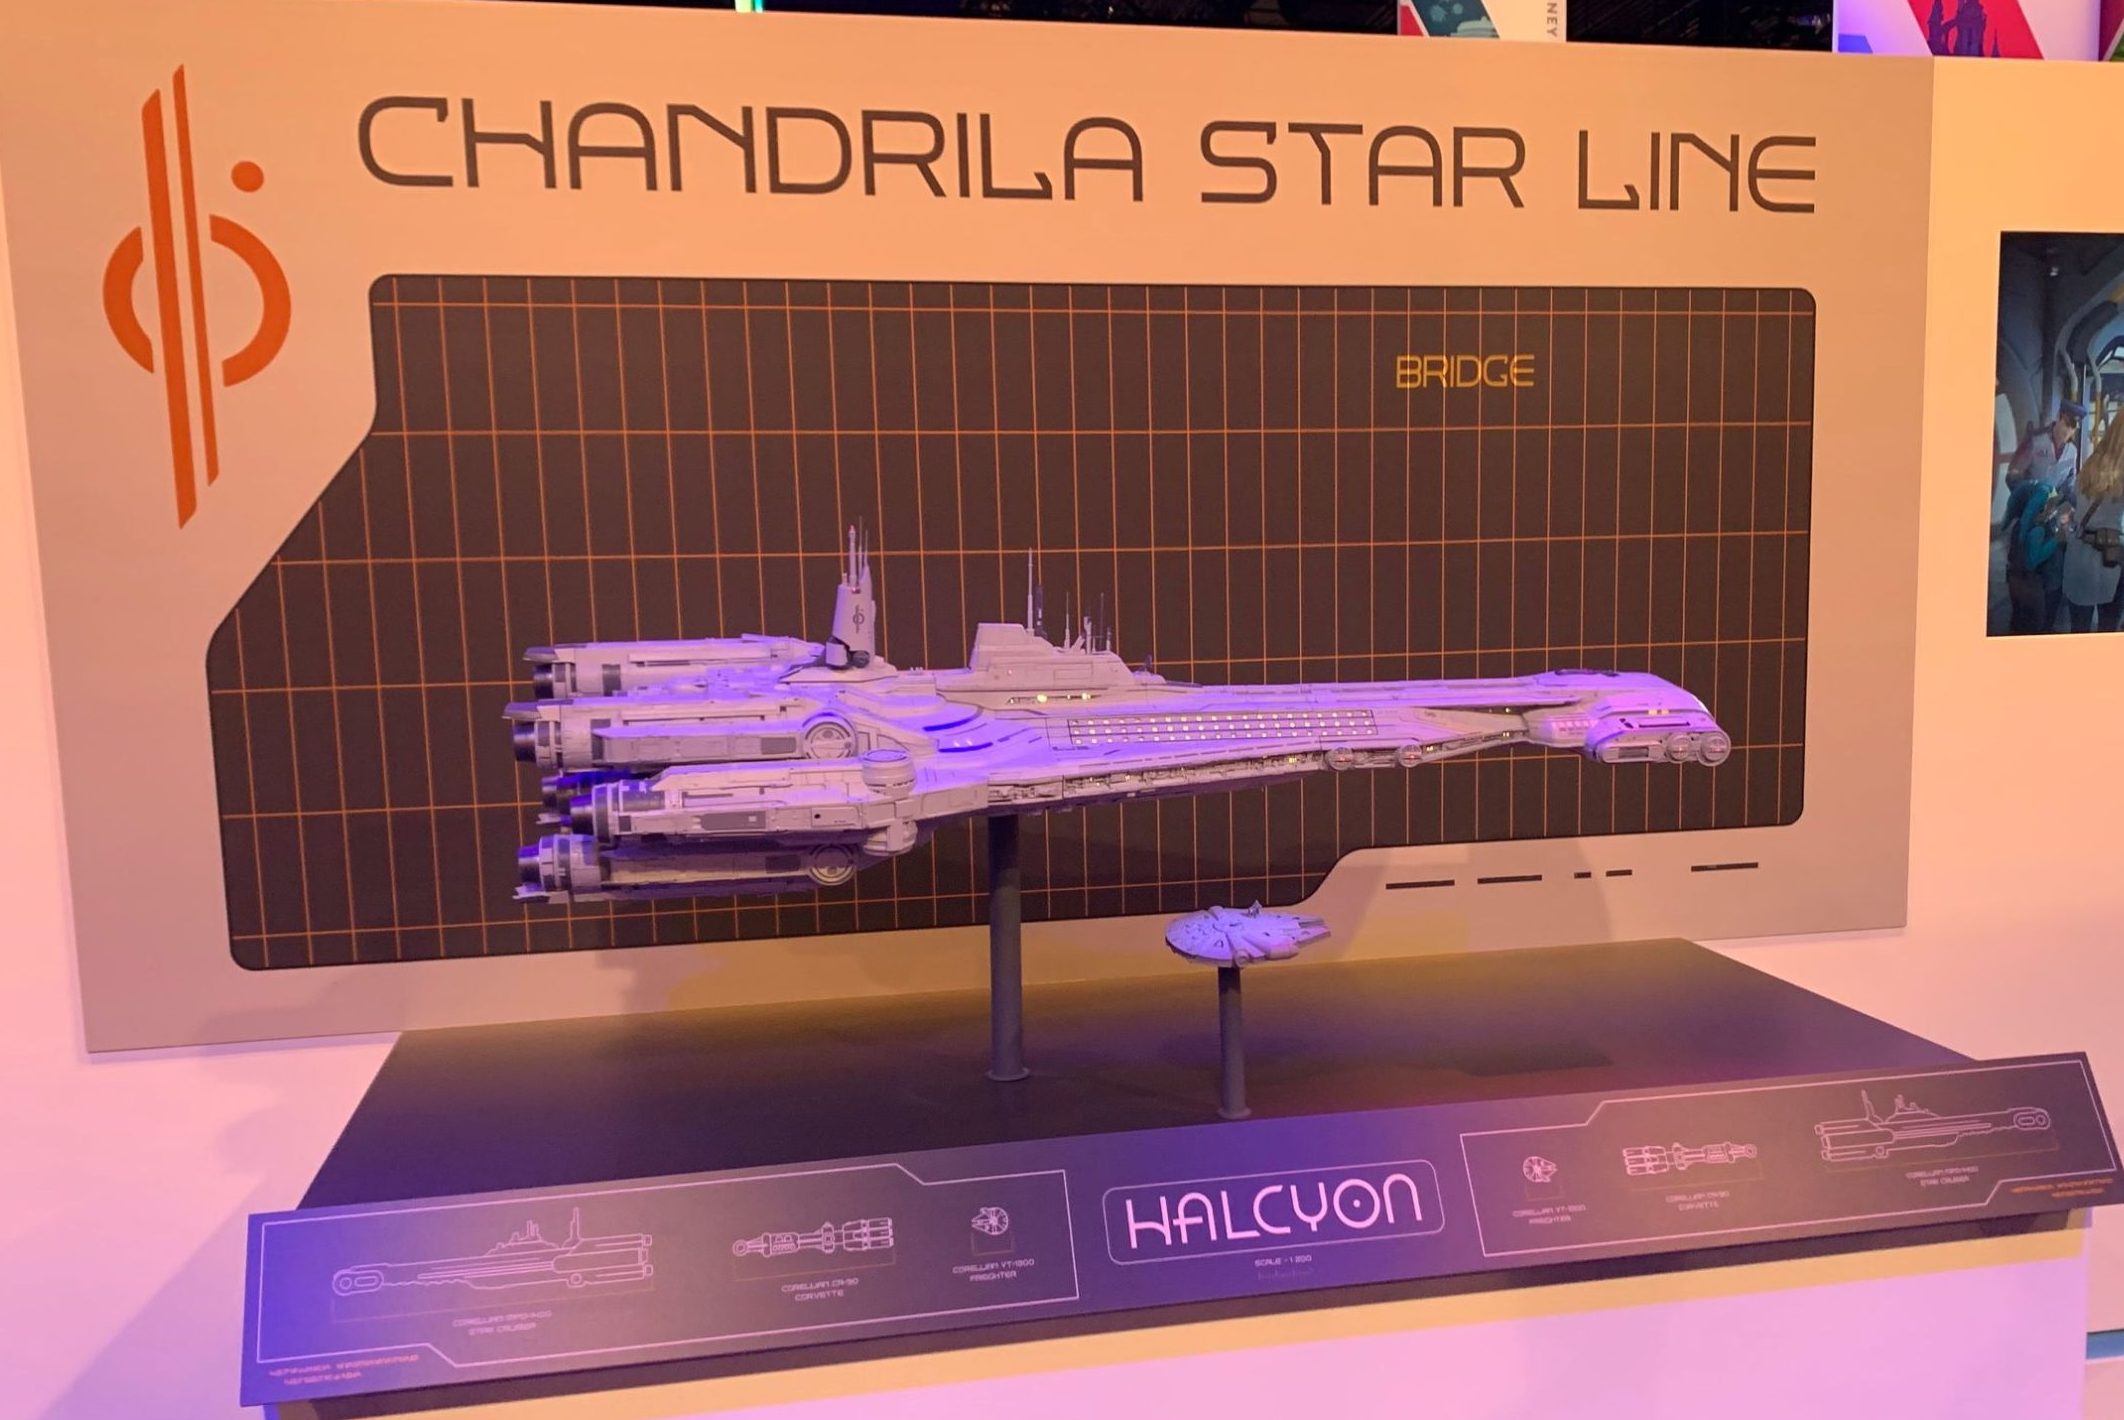 Lightspeed Ahead to Star Wars: Galactic Starcruiser